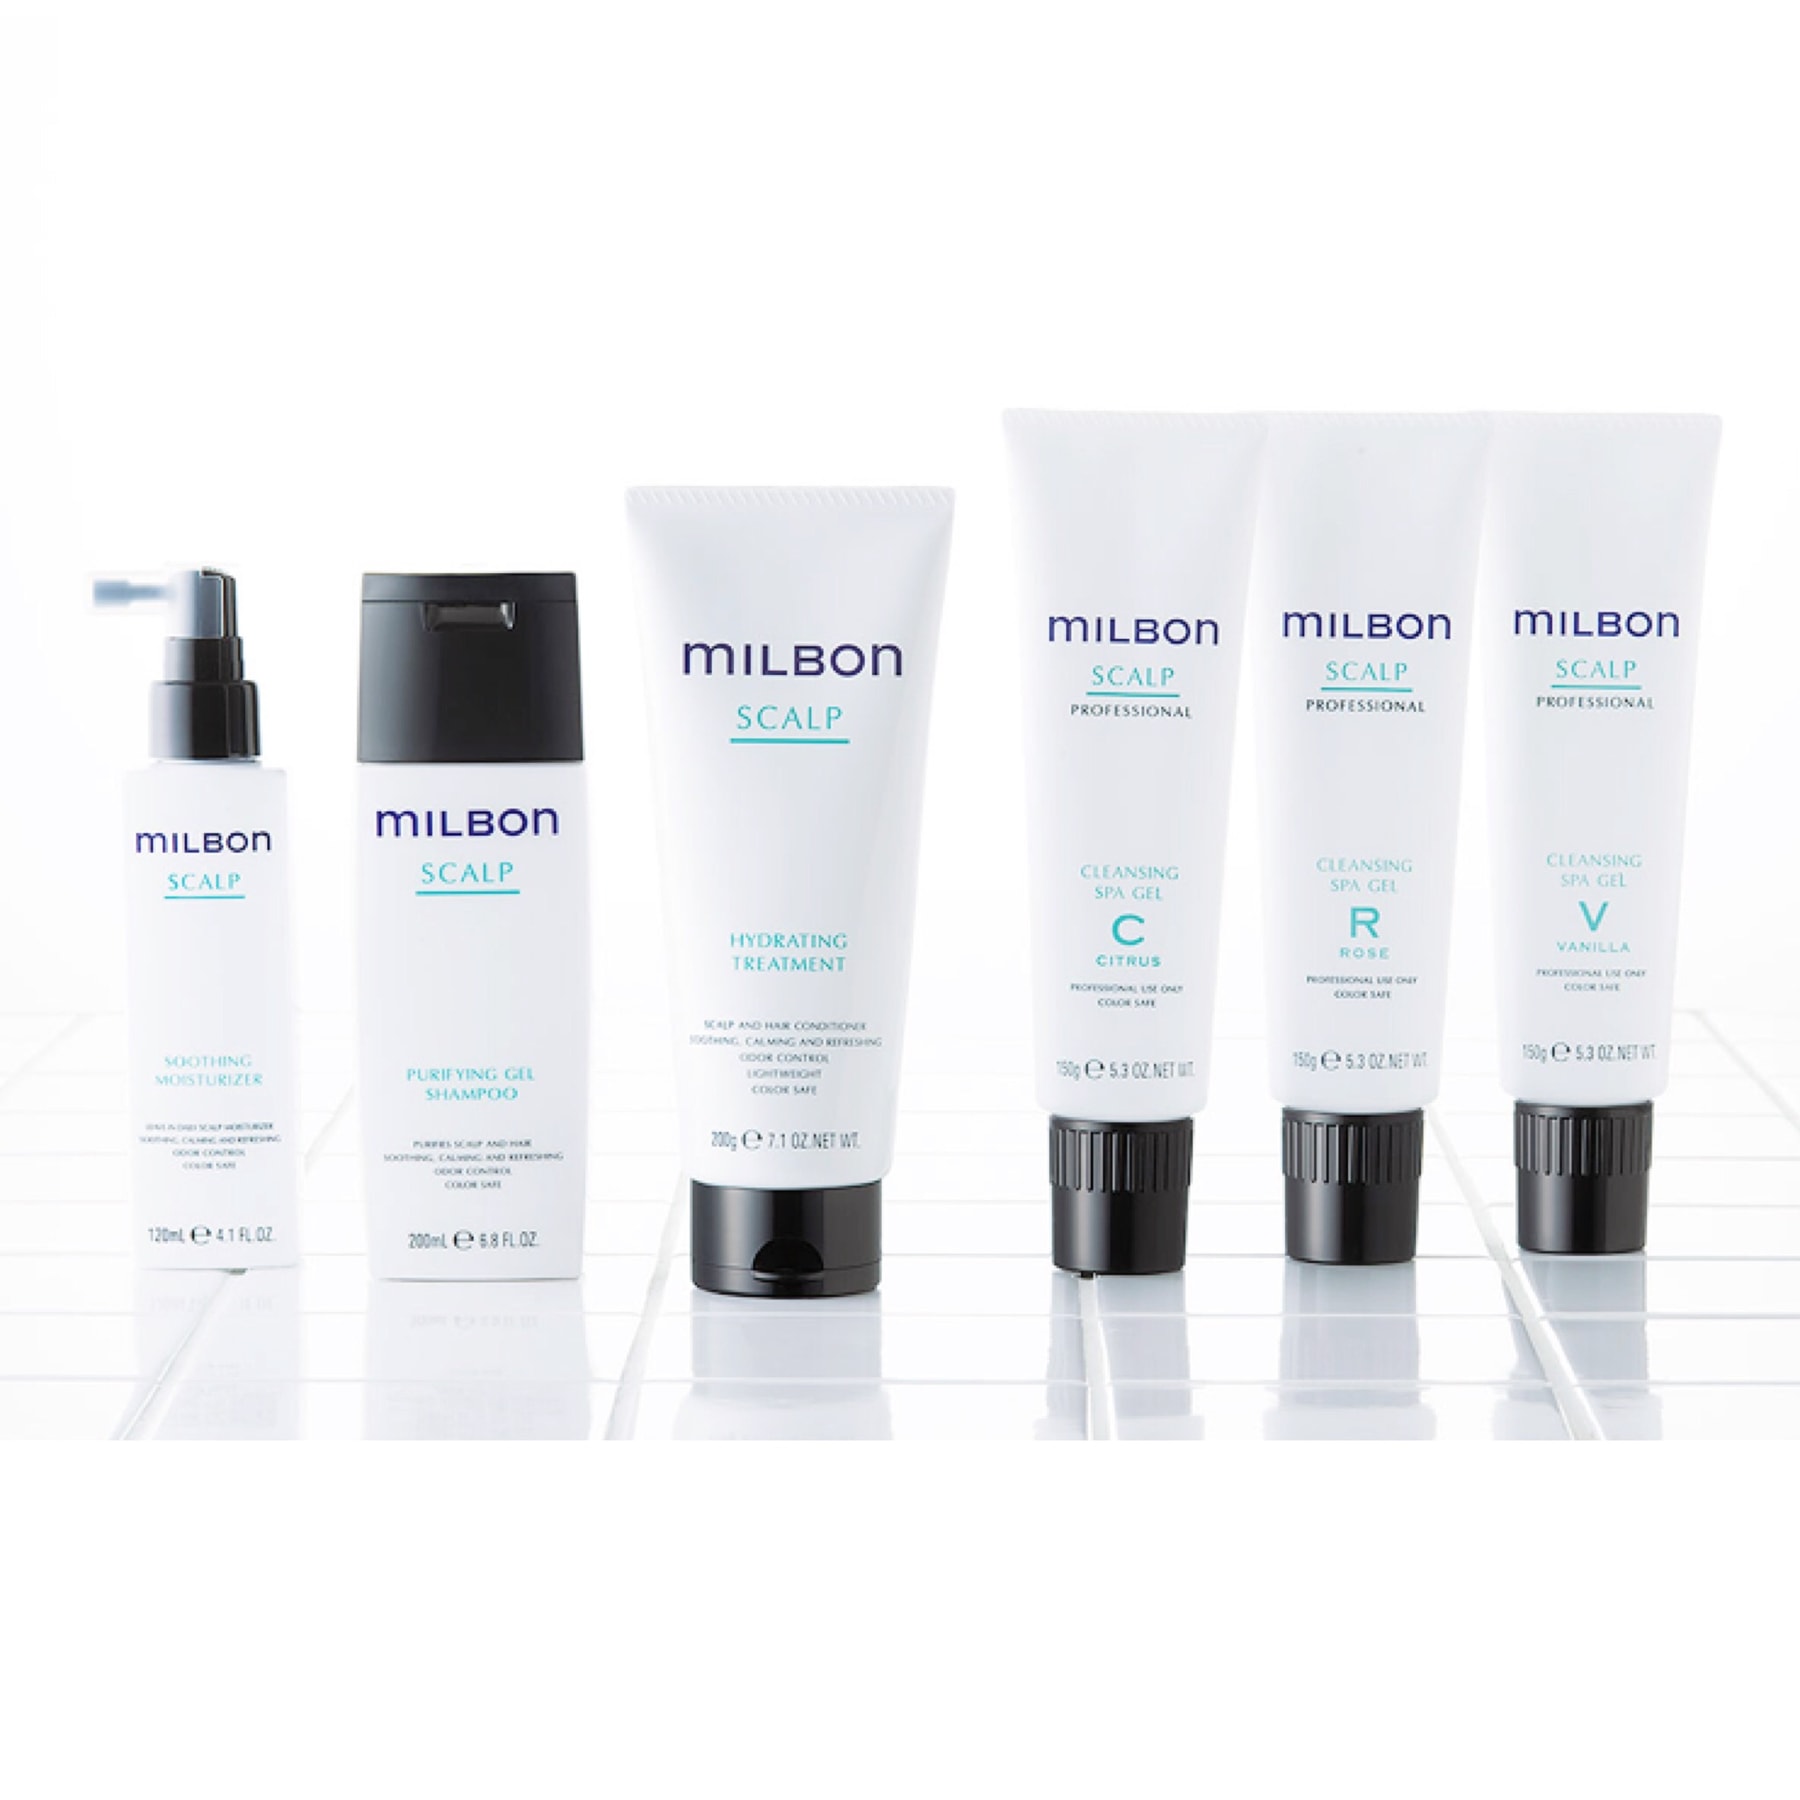 MILBON “SCALP shampoo“